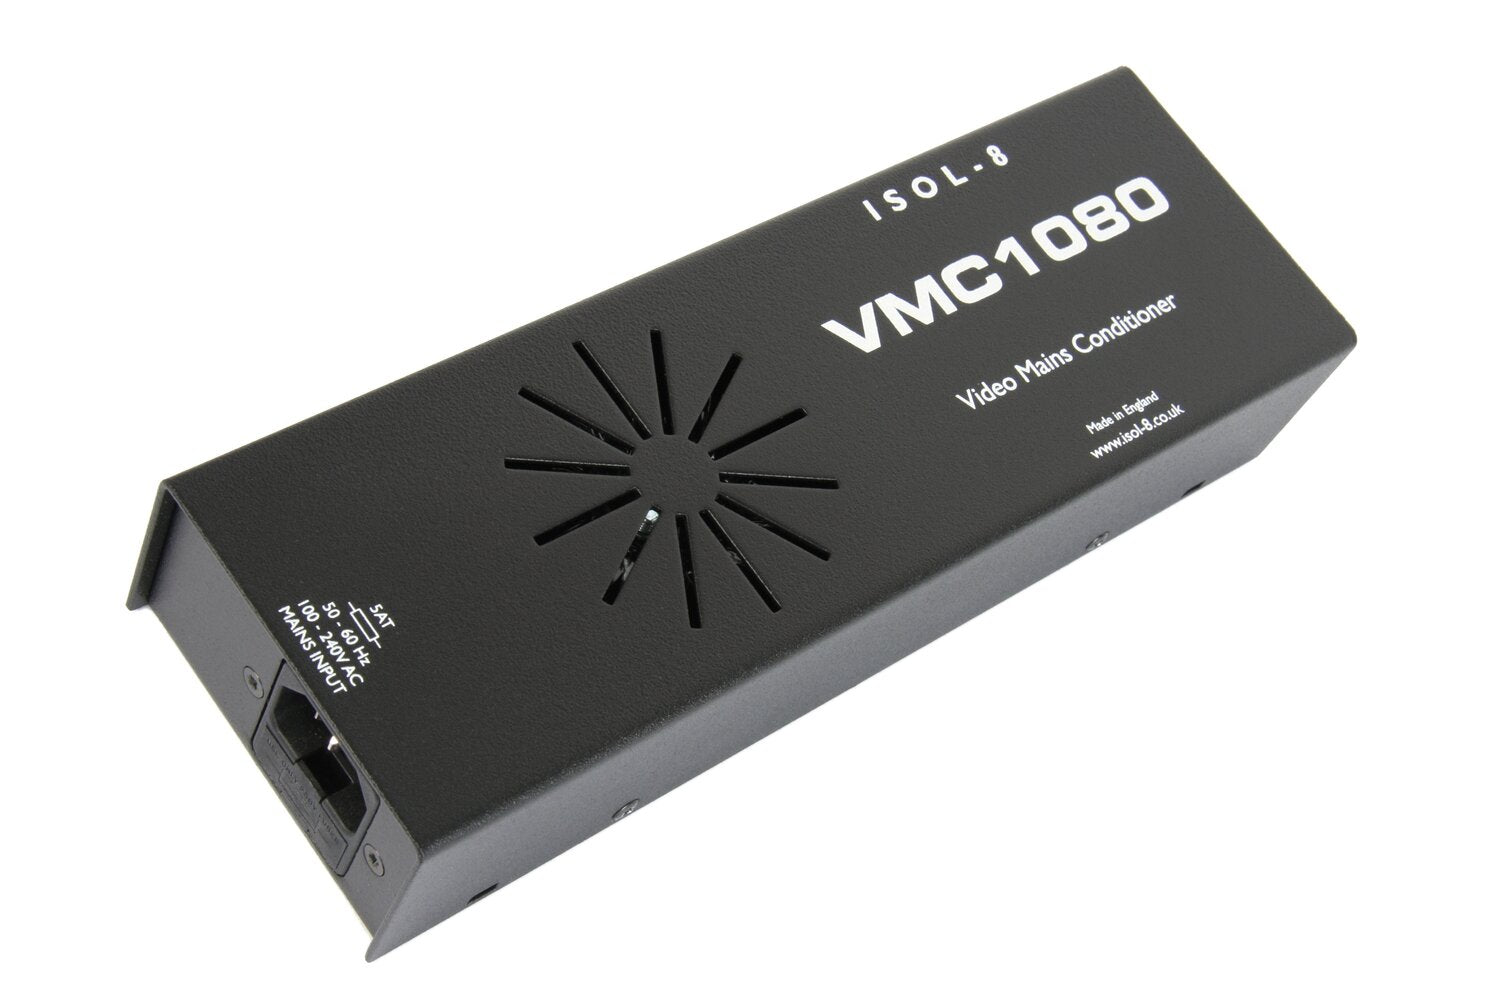 ISOL-8 VMC1080 Video Mains Conditioner.